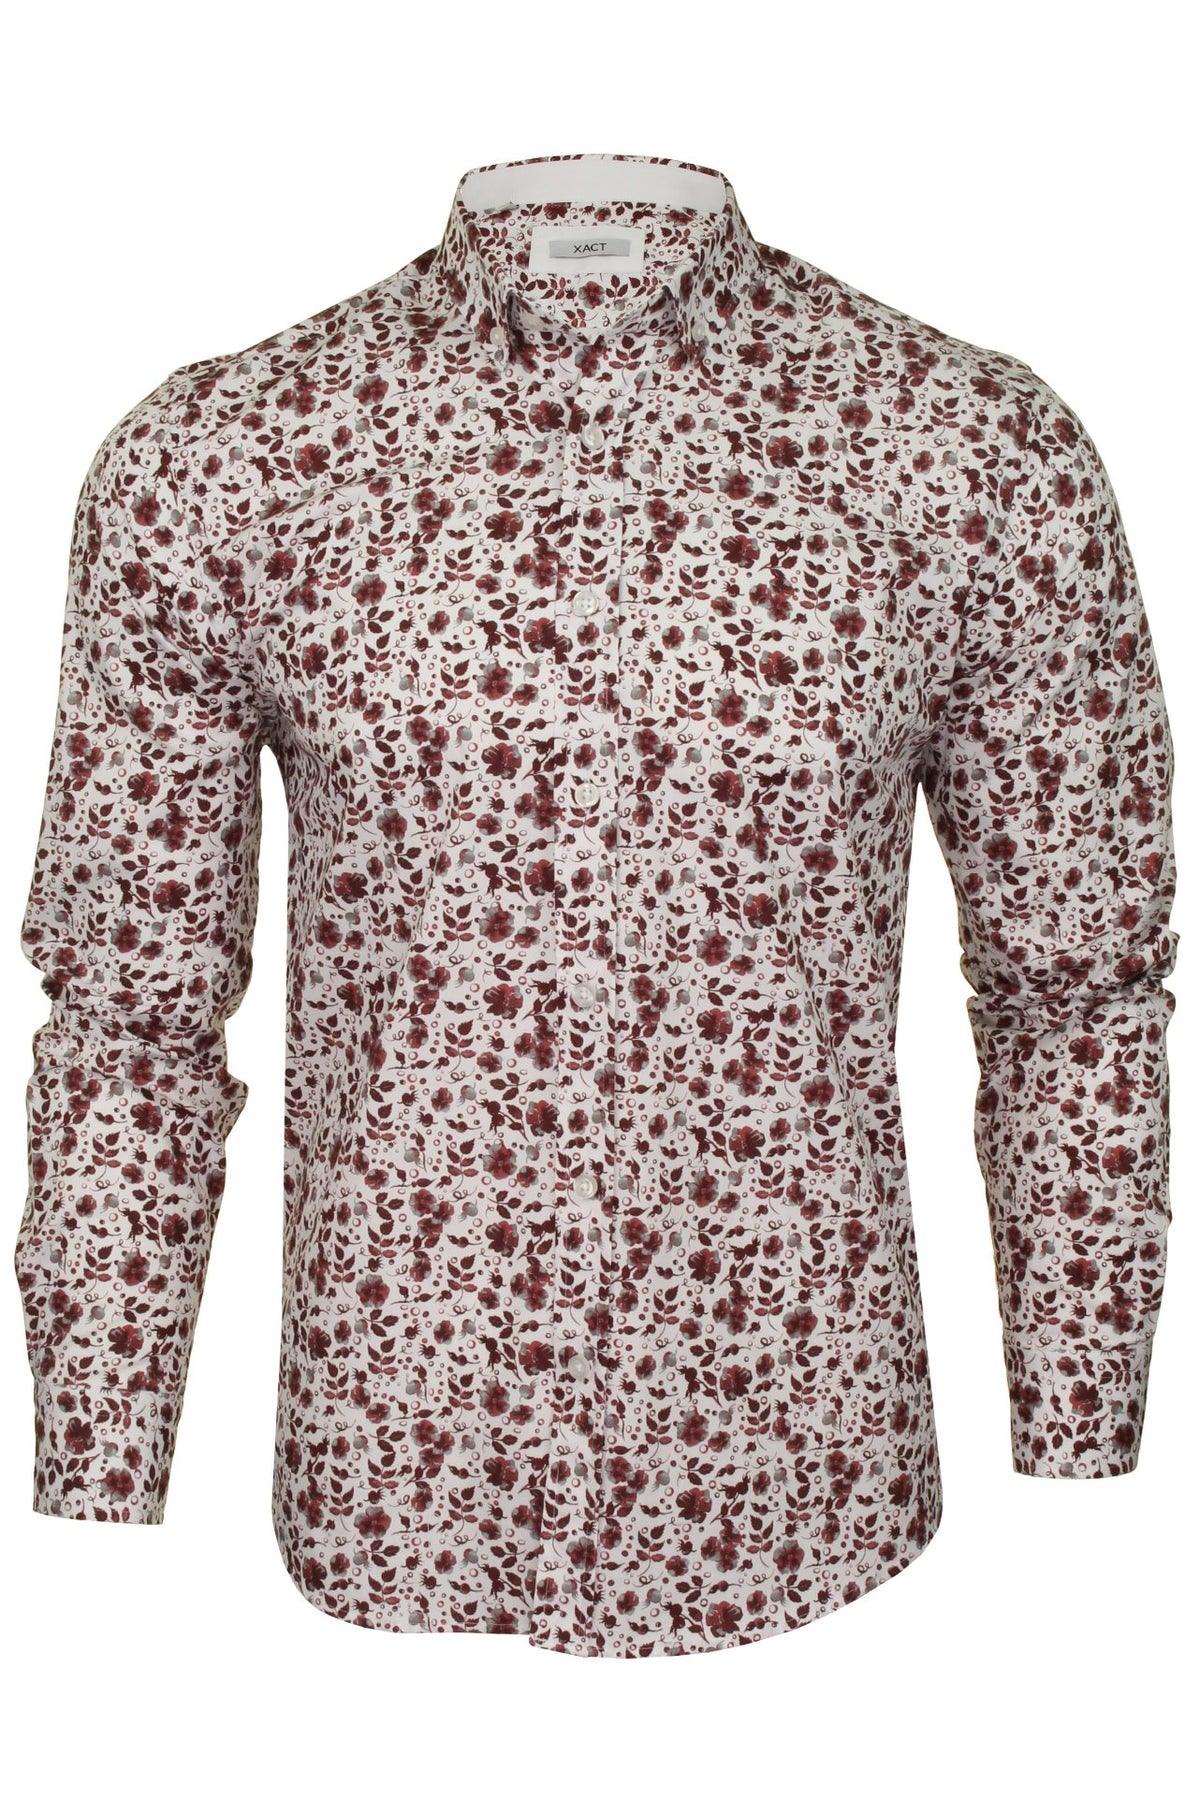 Xact Mens Floral Long Sleeved Shirt, 01, Xsh1089, White/ Burgundy